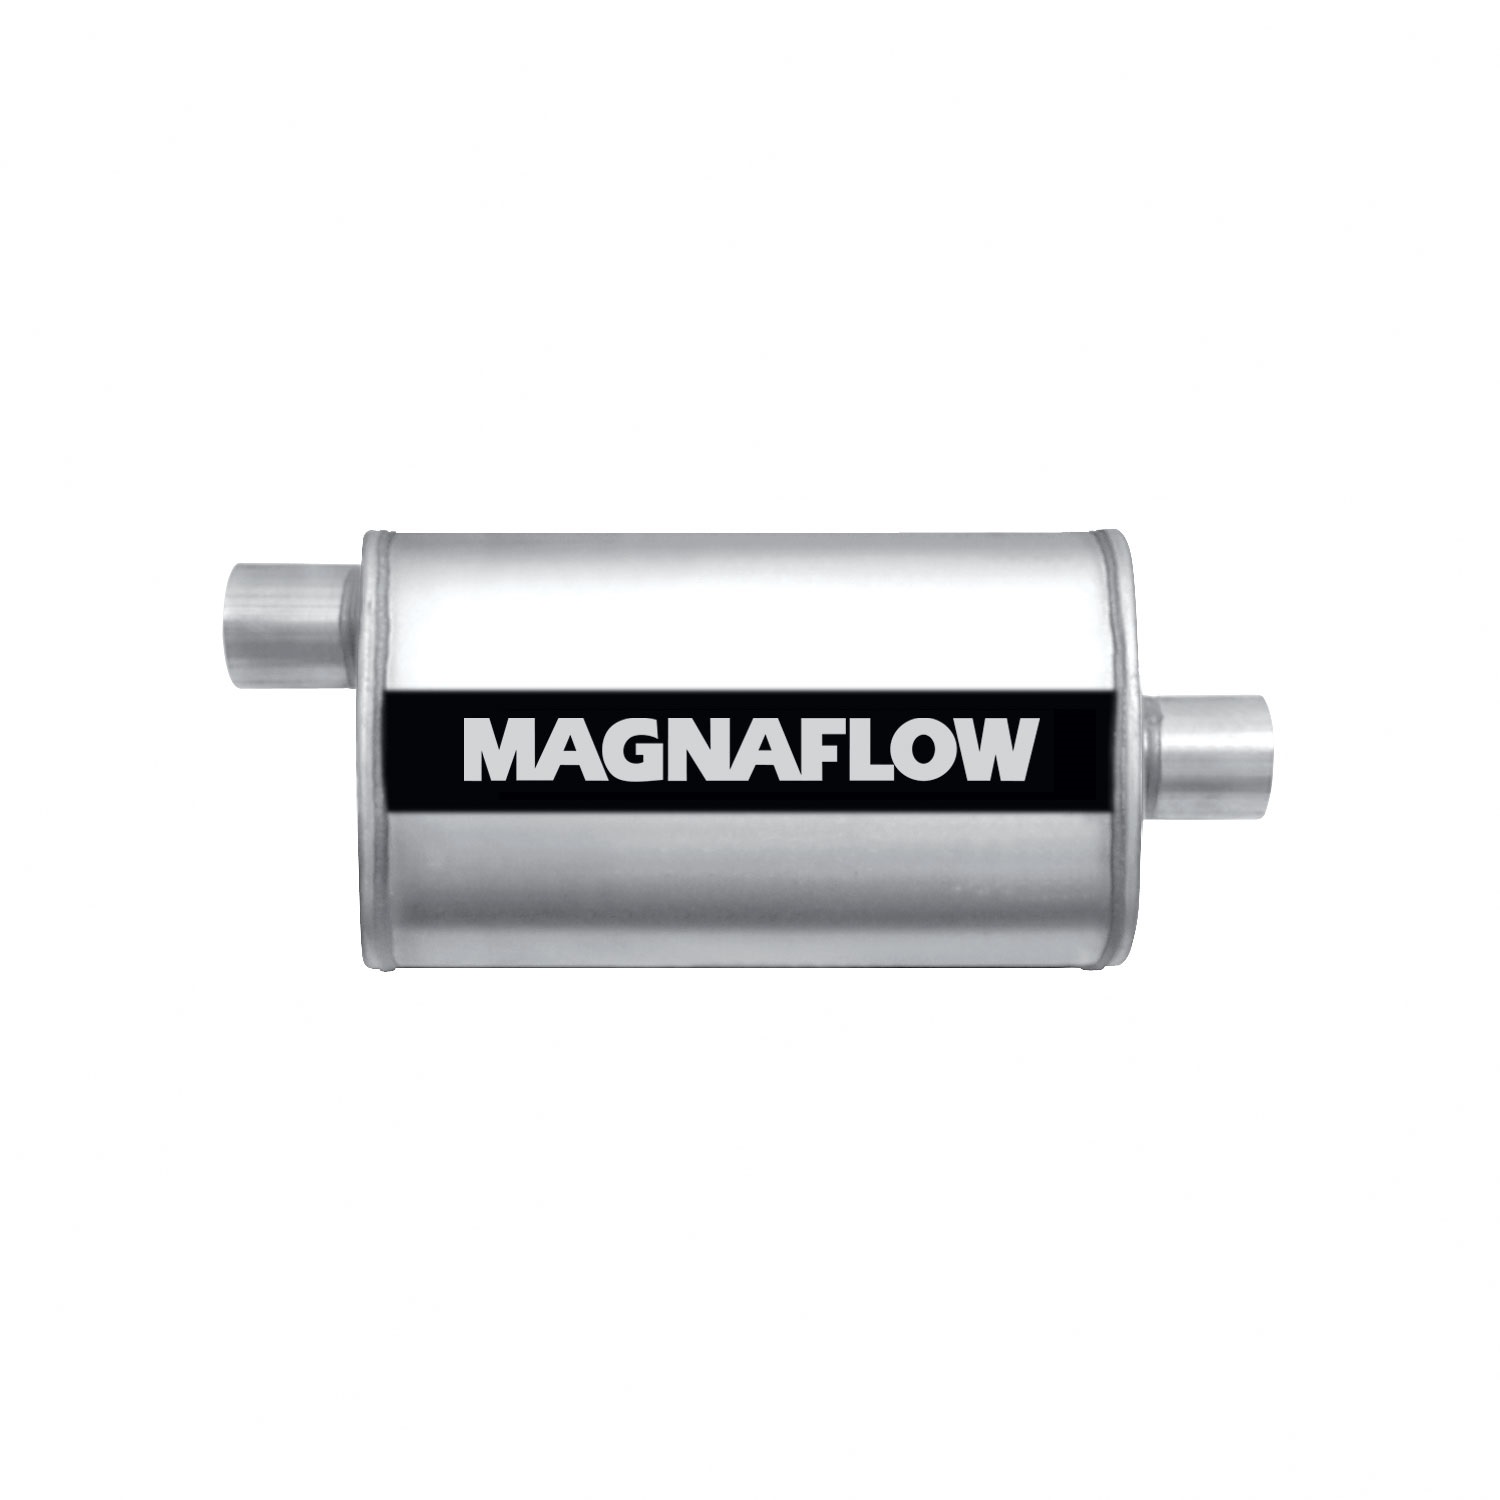 Magnaflow Performance Exhaust Magnaflow Performance Exhaust 11224 Stainless Steel Muffler